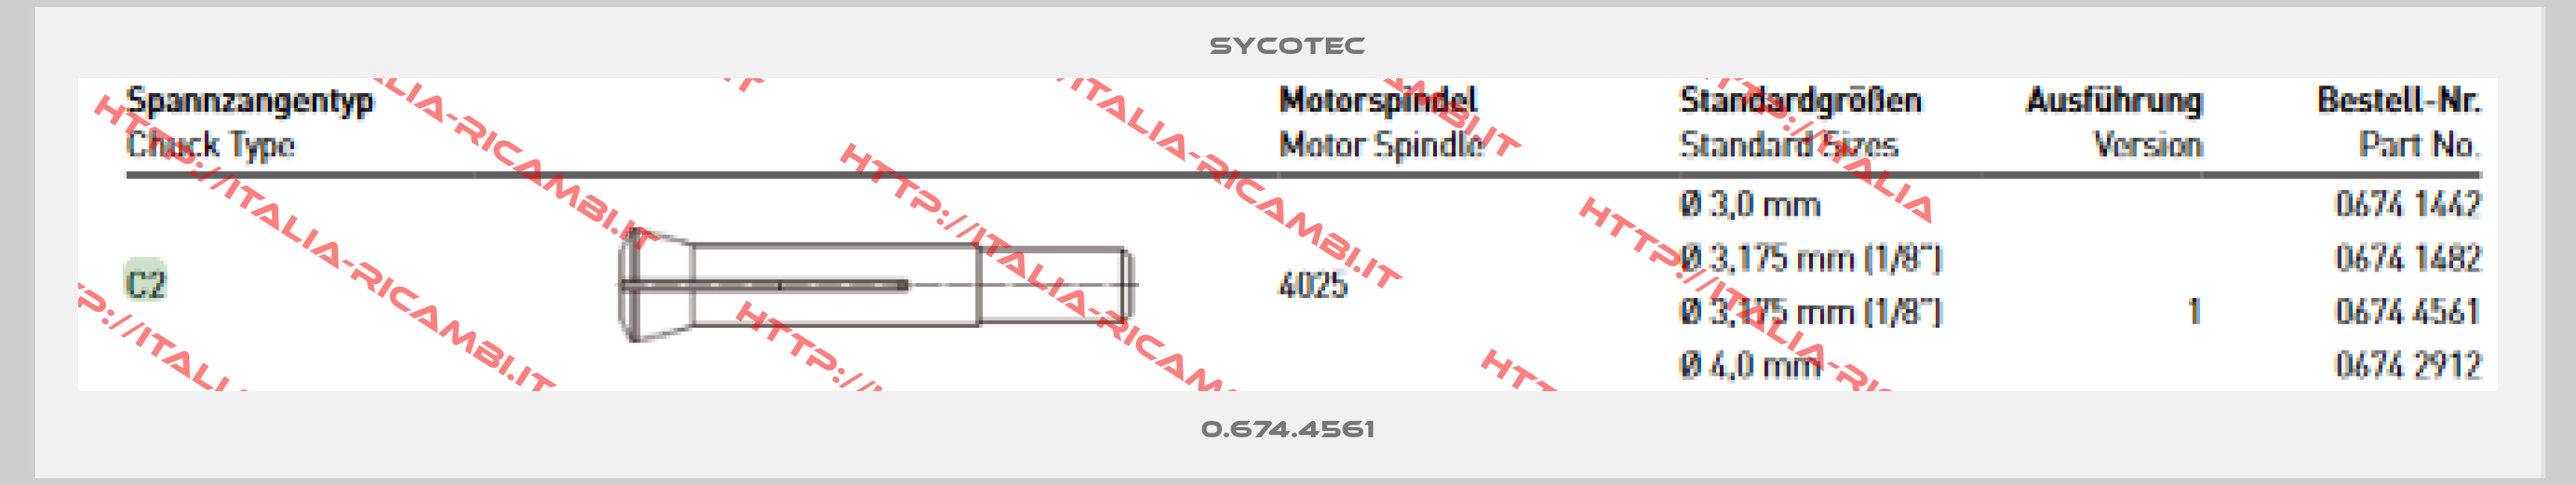 SycoTec-0.674.4561